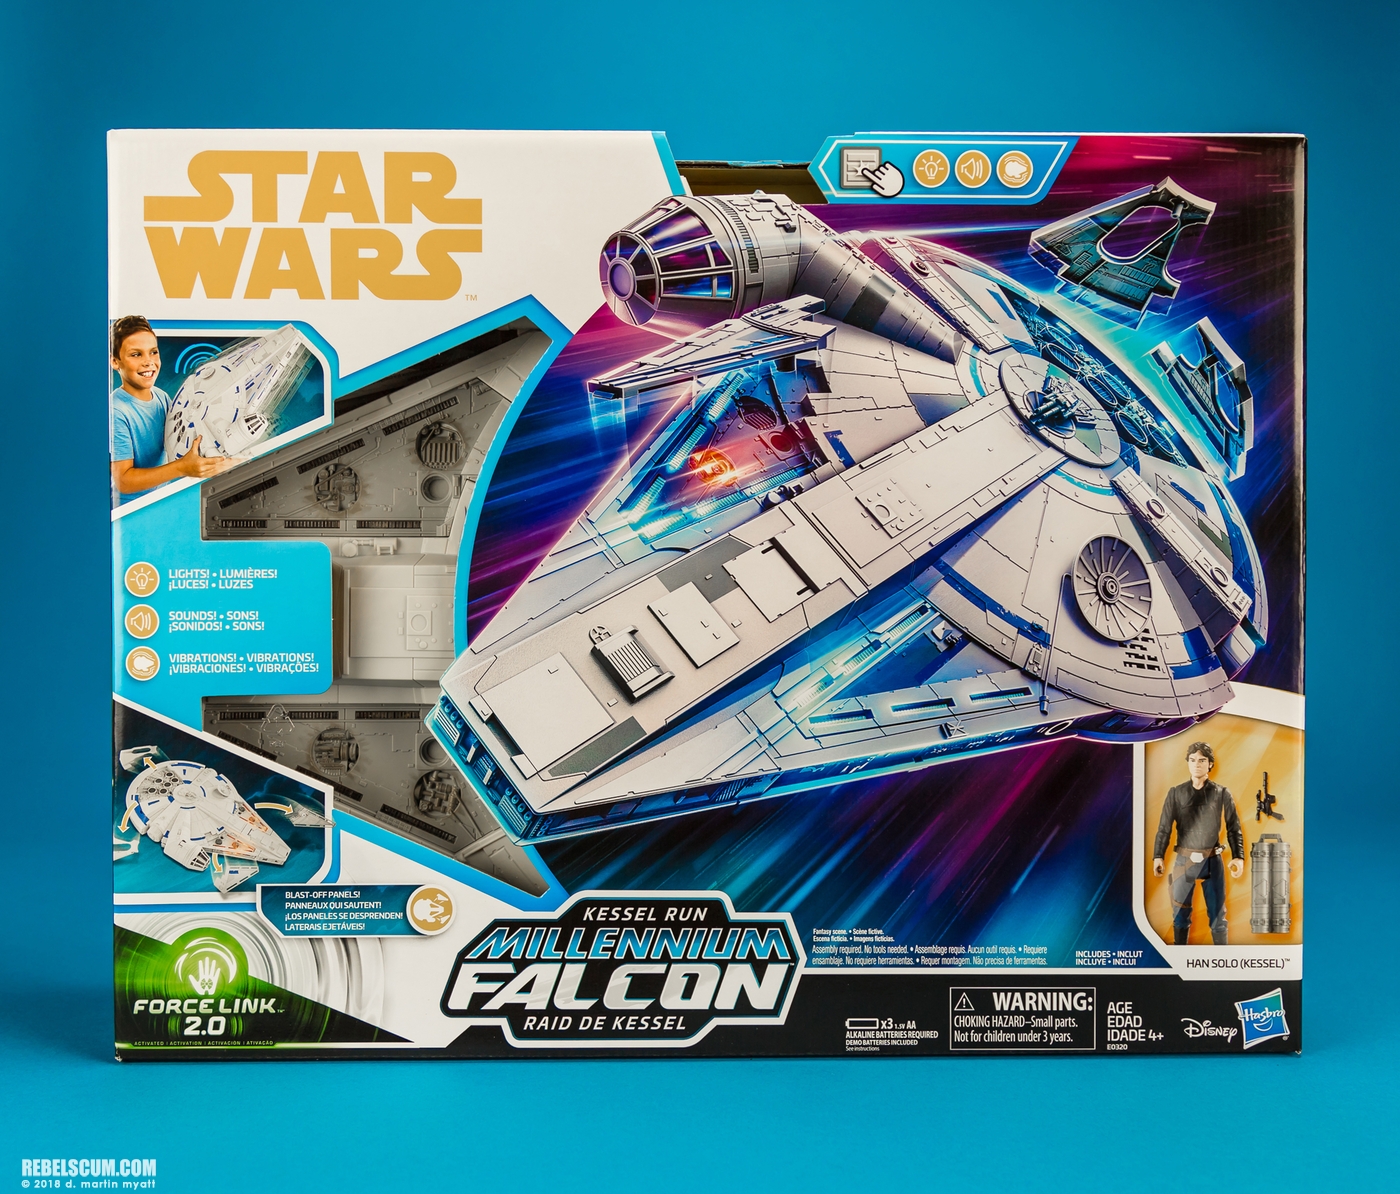 Kessel-Run-Millennium-Falcon-Solo-Star-Wars-Universe-Hasbro-034.jpg